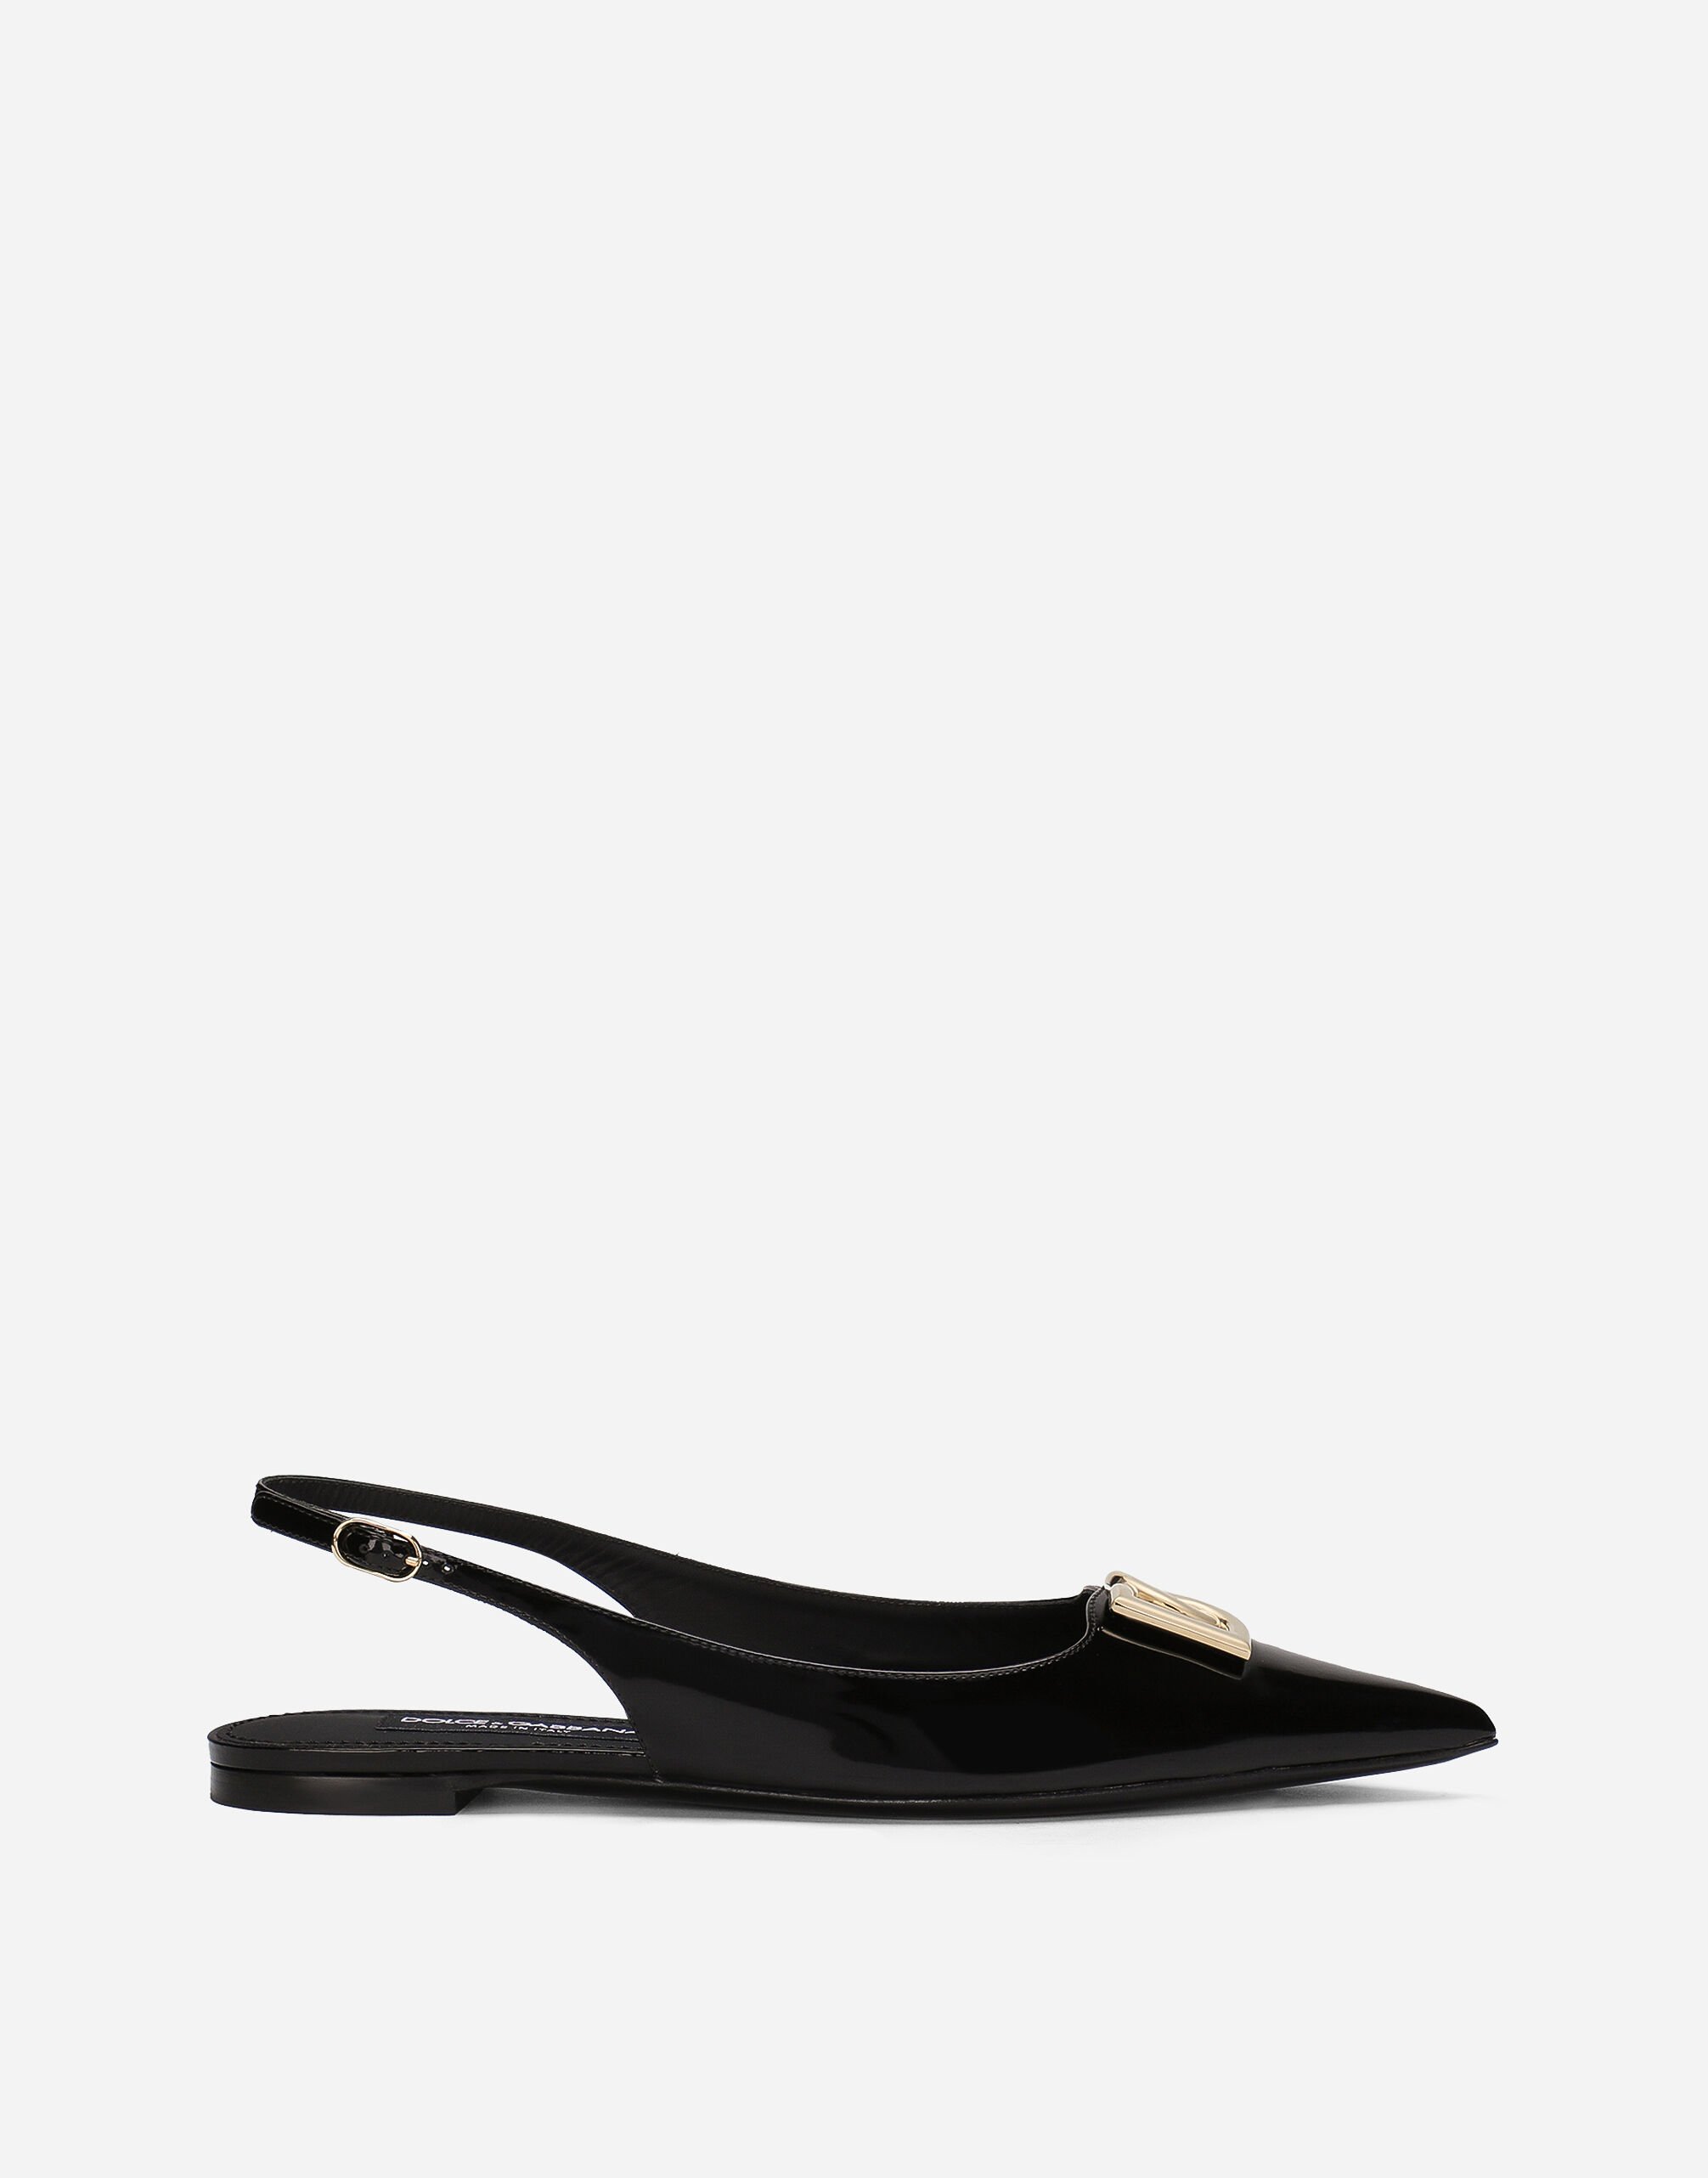 Dolce & Gabbana Zapato destalonado en piel de becerro brillante Negro BB7603AW576